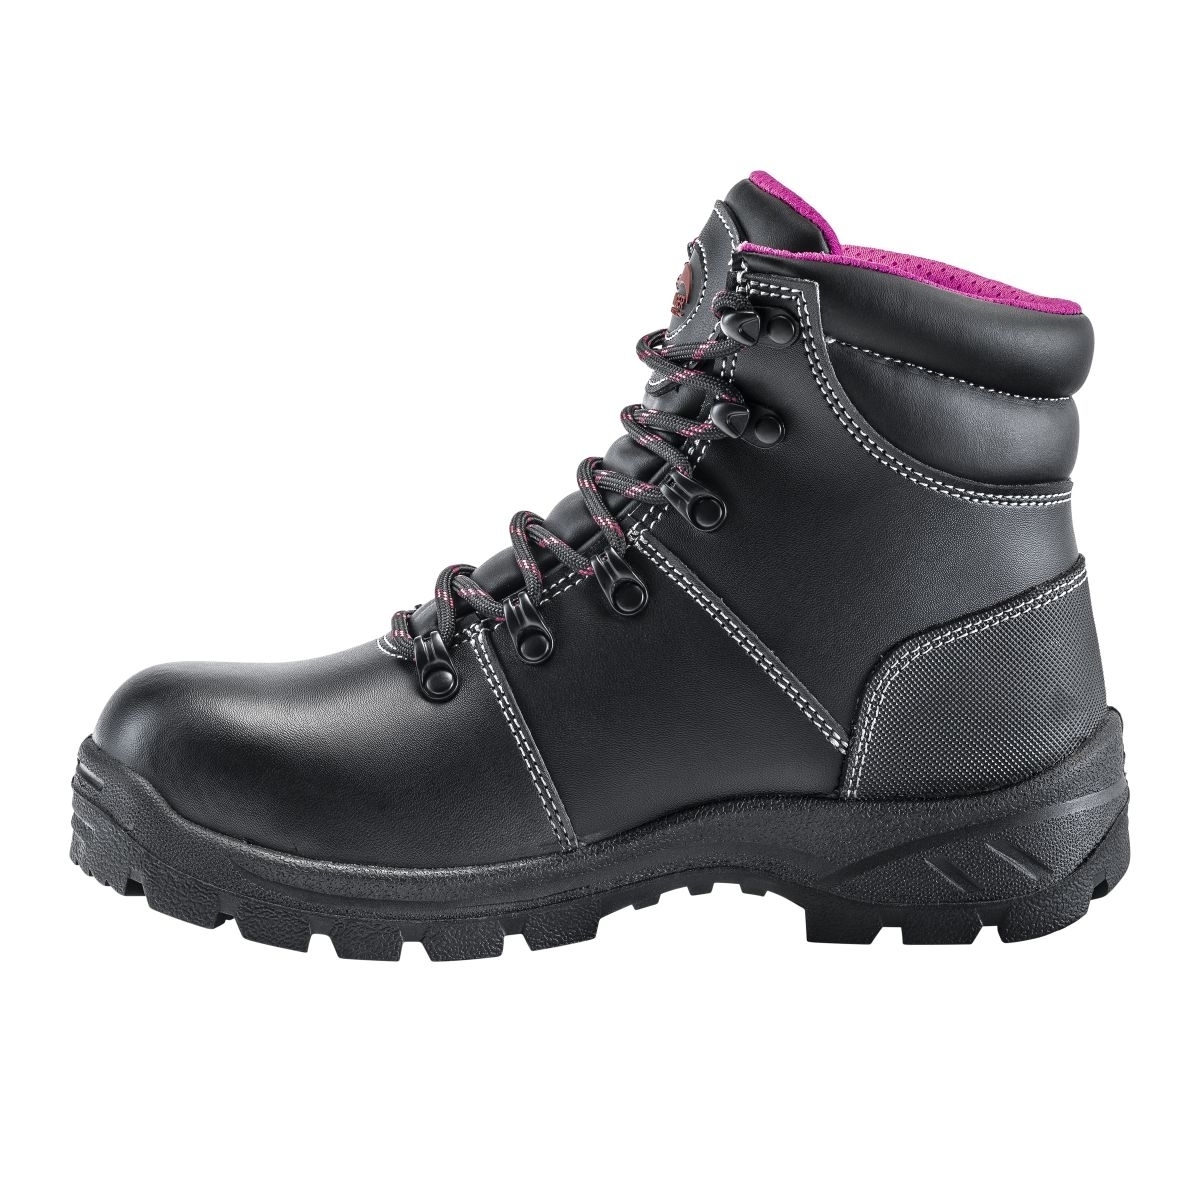 FSI FOOTWEAR SPECIALTIES INTERNATIONAL NAUTILUS Avenger Women's 6 Builder Steel Toe Waterproof EH Work Boots Black - A8124 BLACK - BLACK, 8